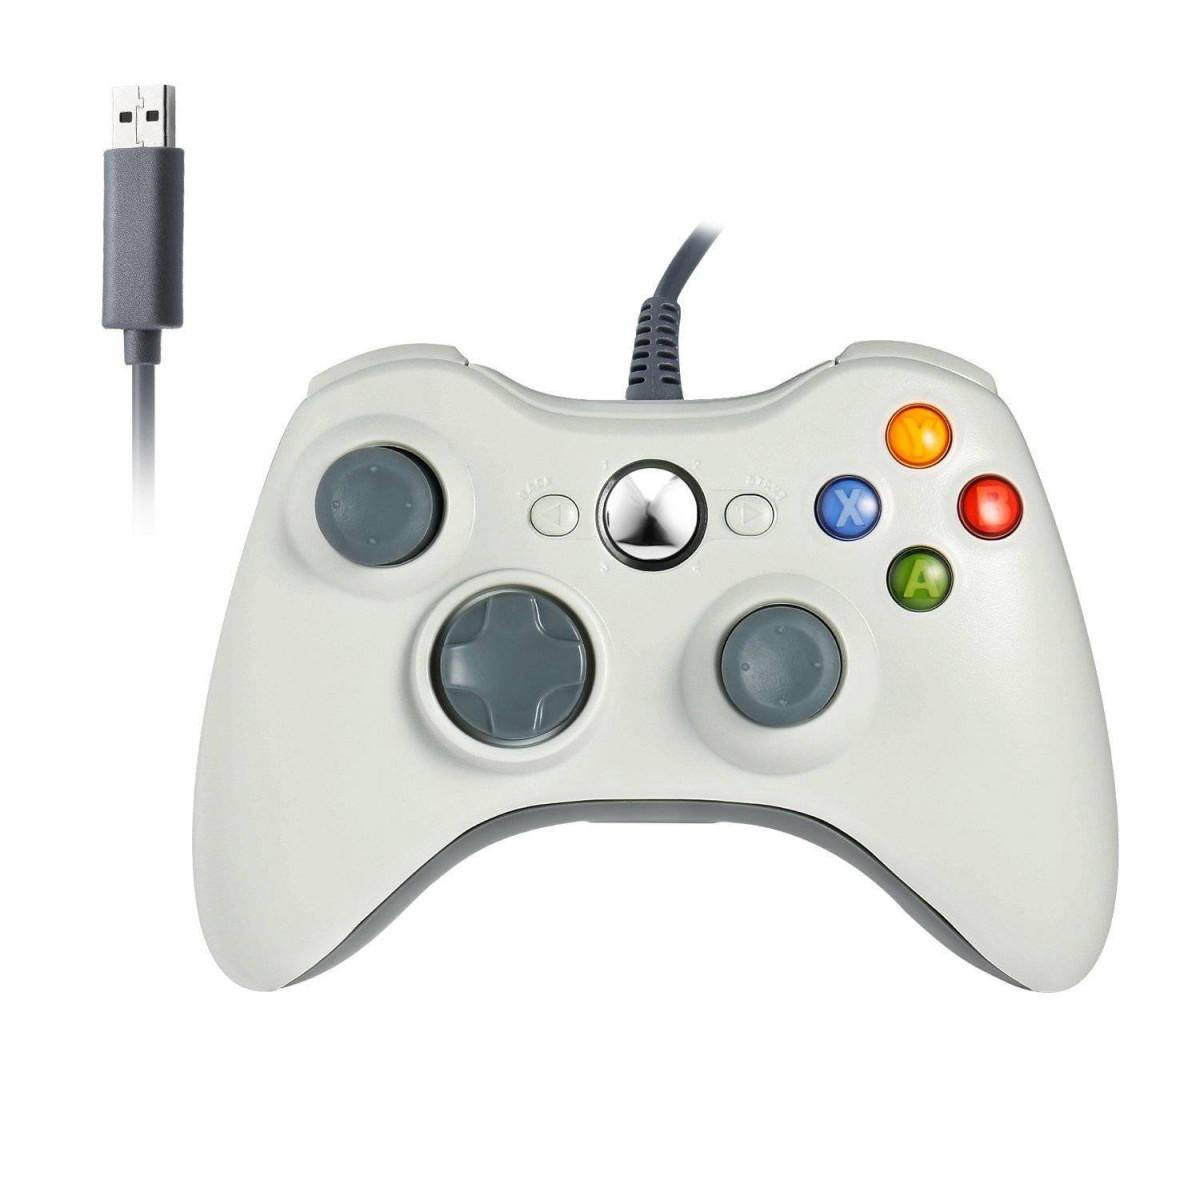 X 360 джойстик. Геймпад Xbox 360 проводной. Джойстик Xbox 360 Wireless. Xbox 360 Controller USB. Джойстик Microsoft (Xbox 360) USB=2422917.